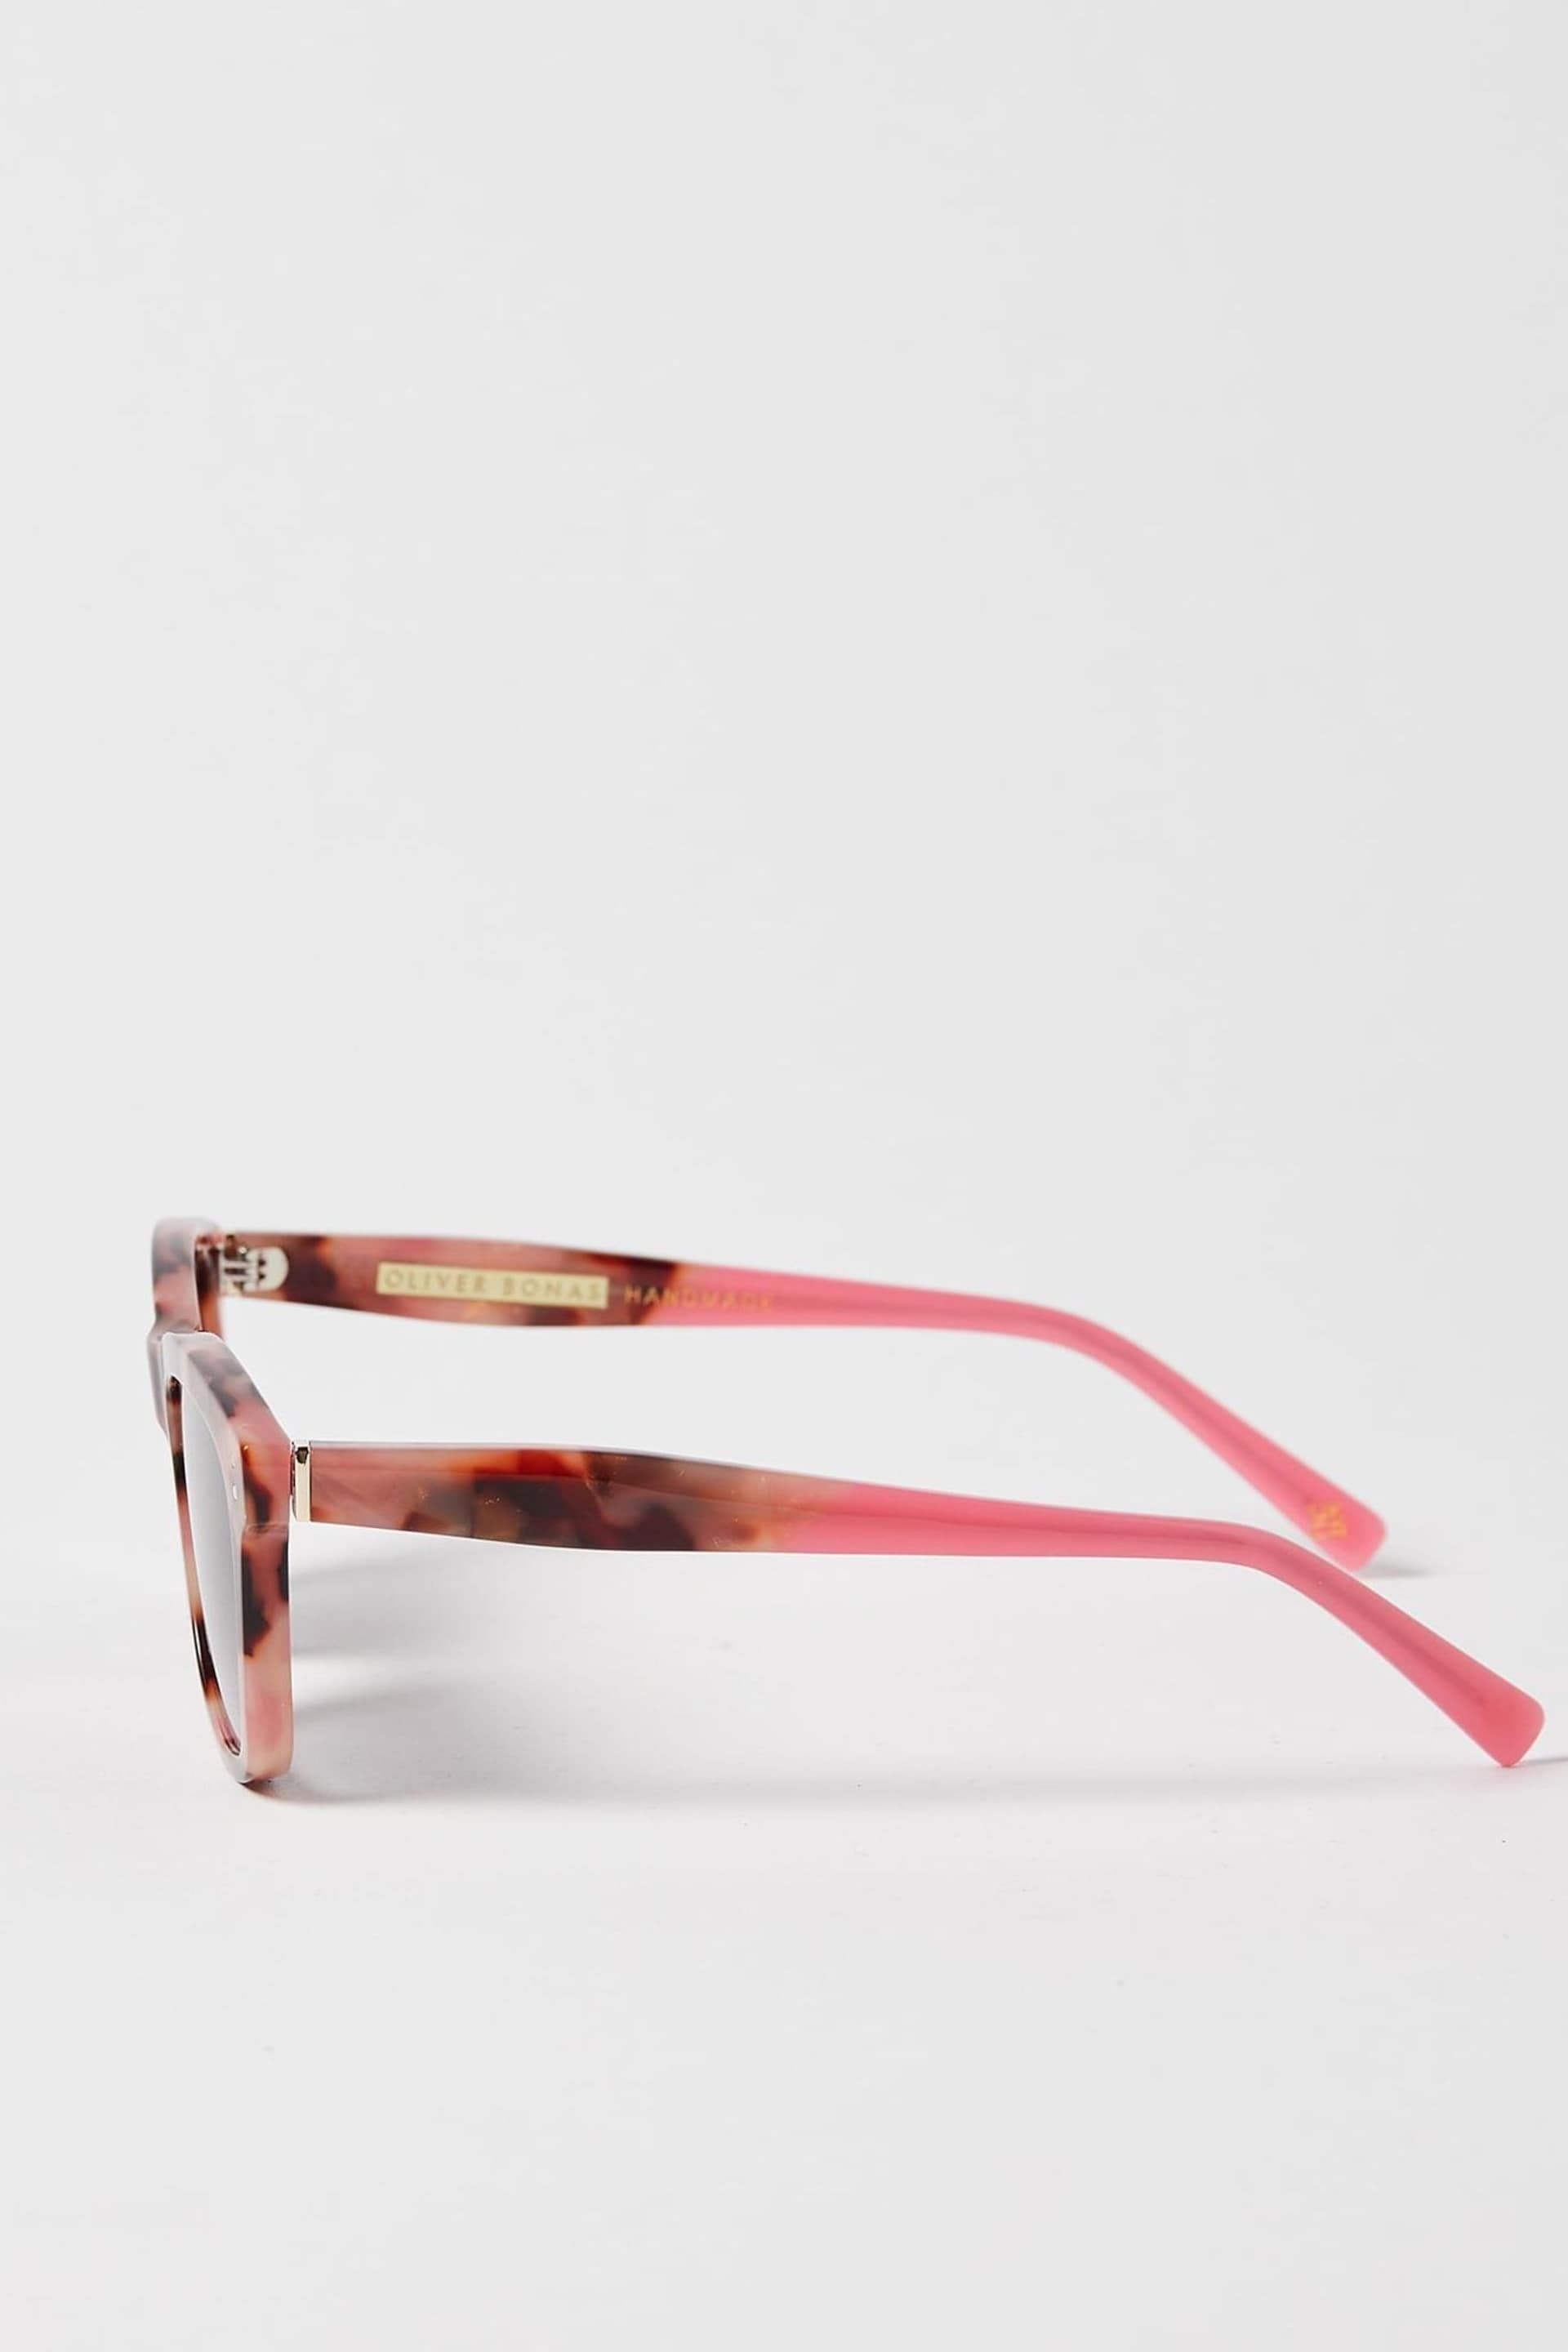 Oliver Bonas Pink Faux Fur Tortoiseshell Rectangle Acetate Sunglasses - Image 3 of 5